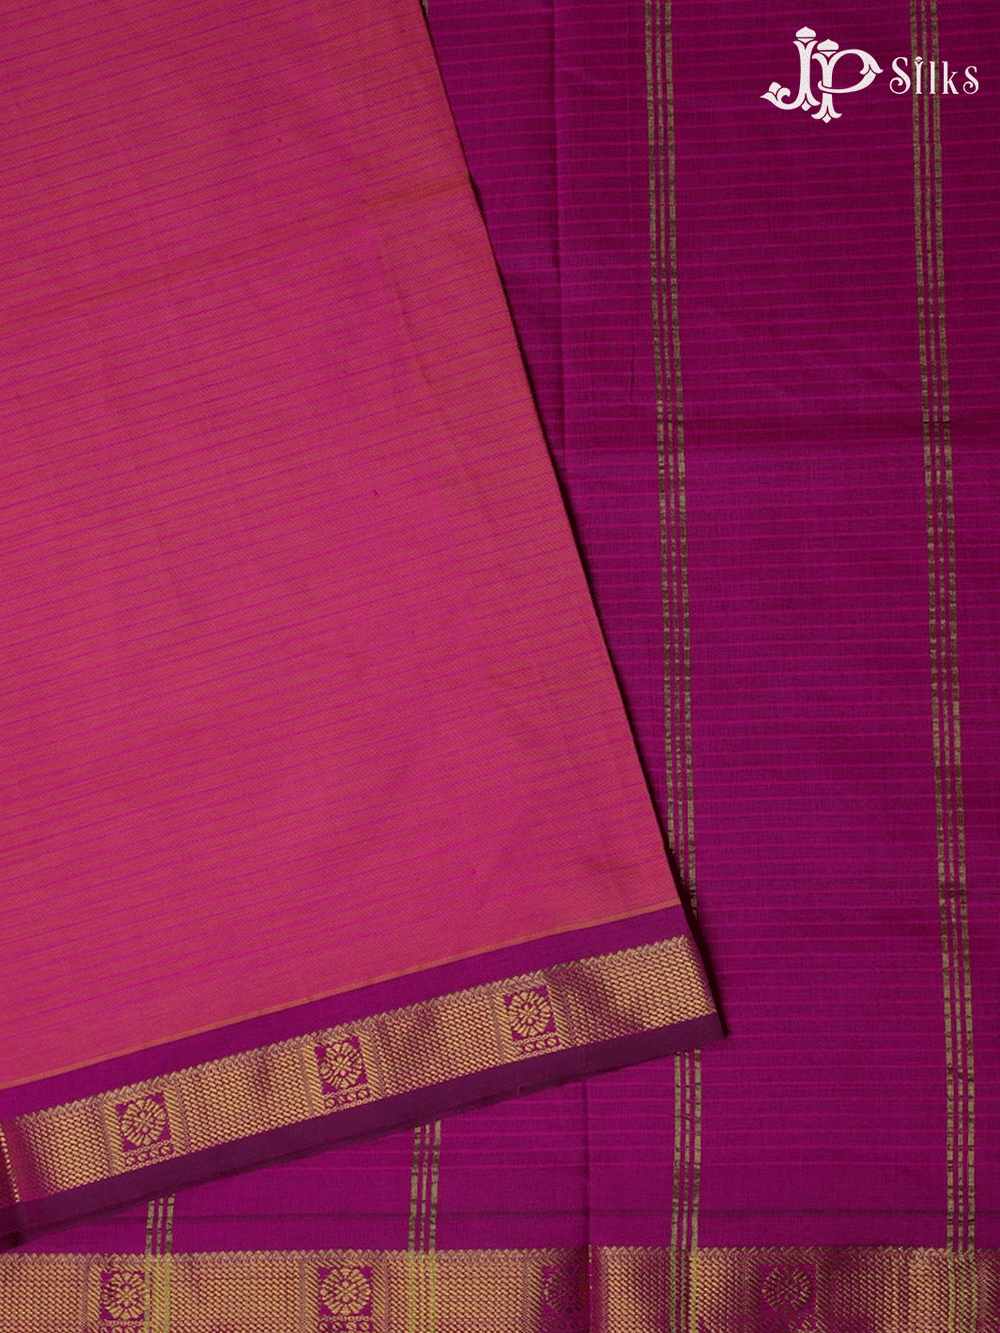 Dark Pink Plain Poly Cotton Saree - F290 - View 1